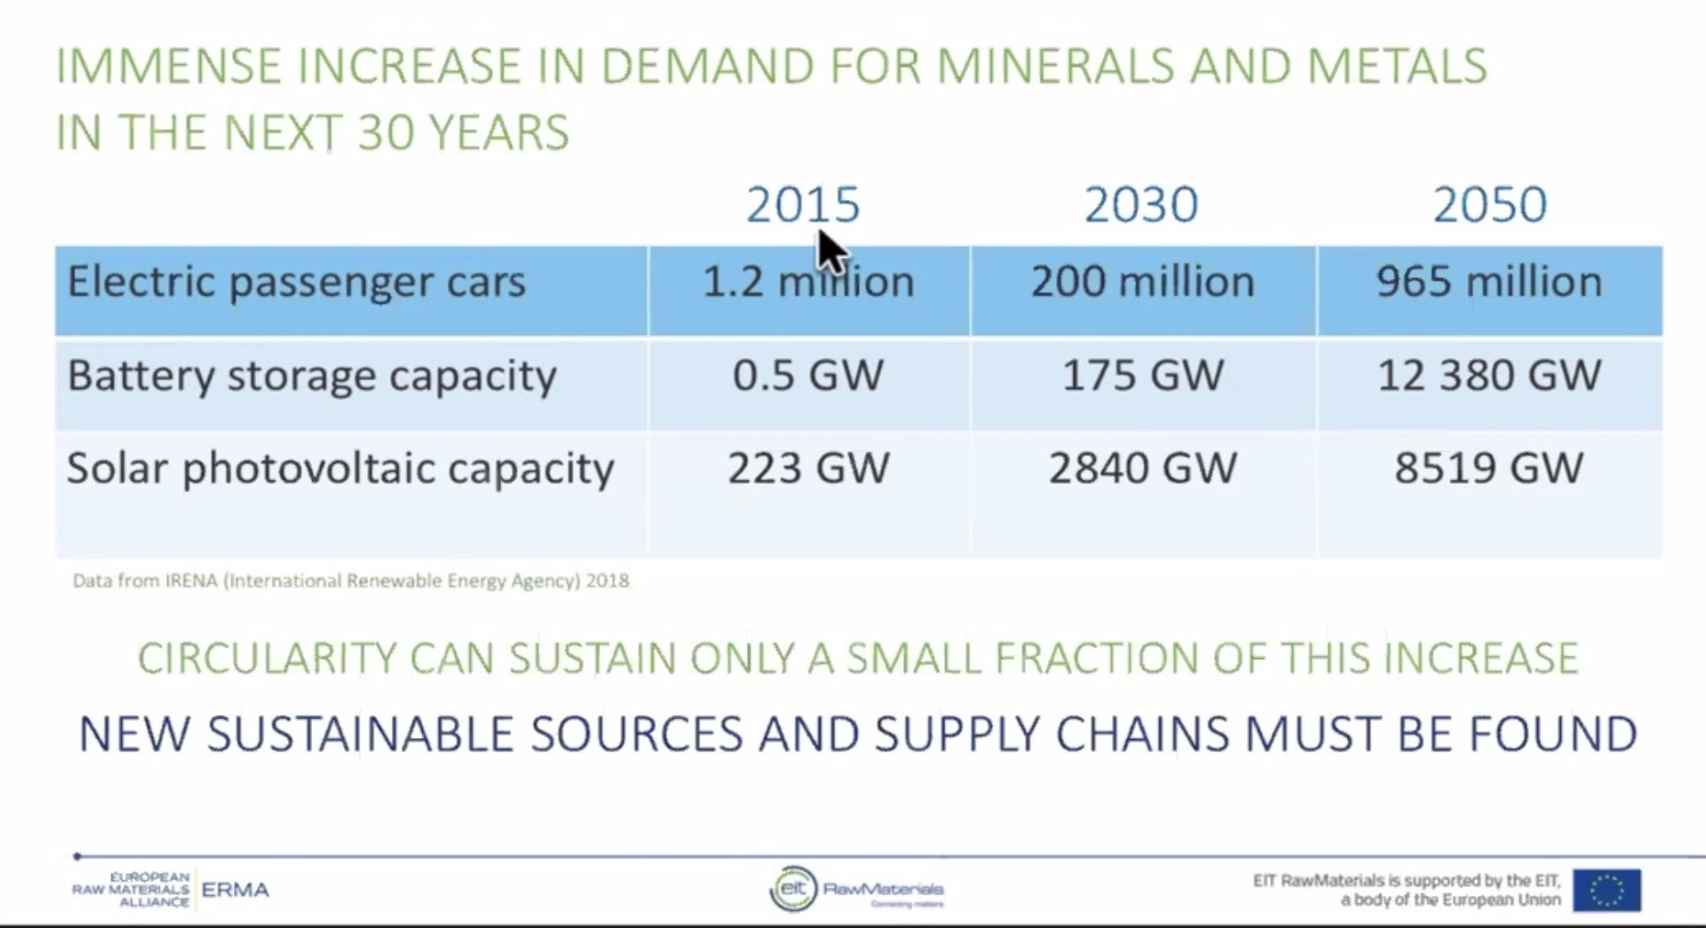 Demanda de minerales criticos para 2050